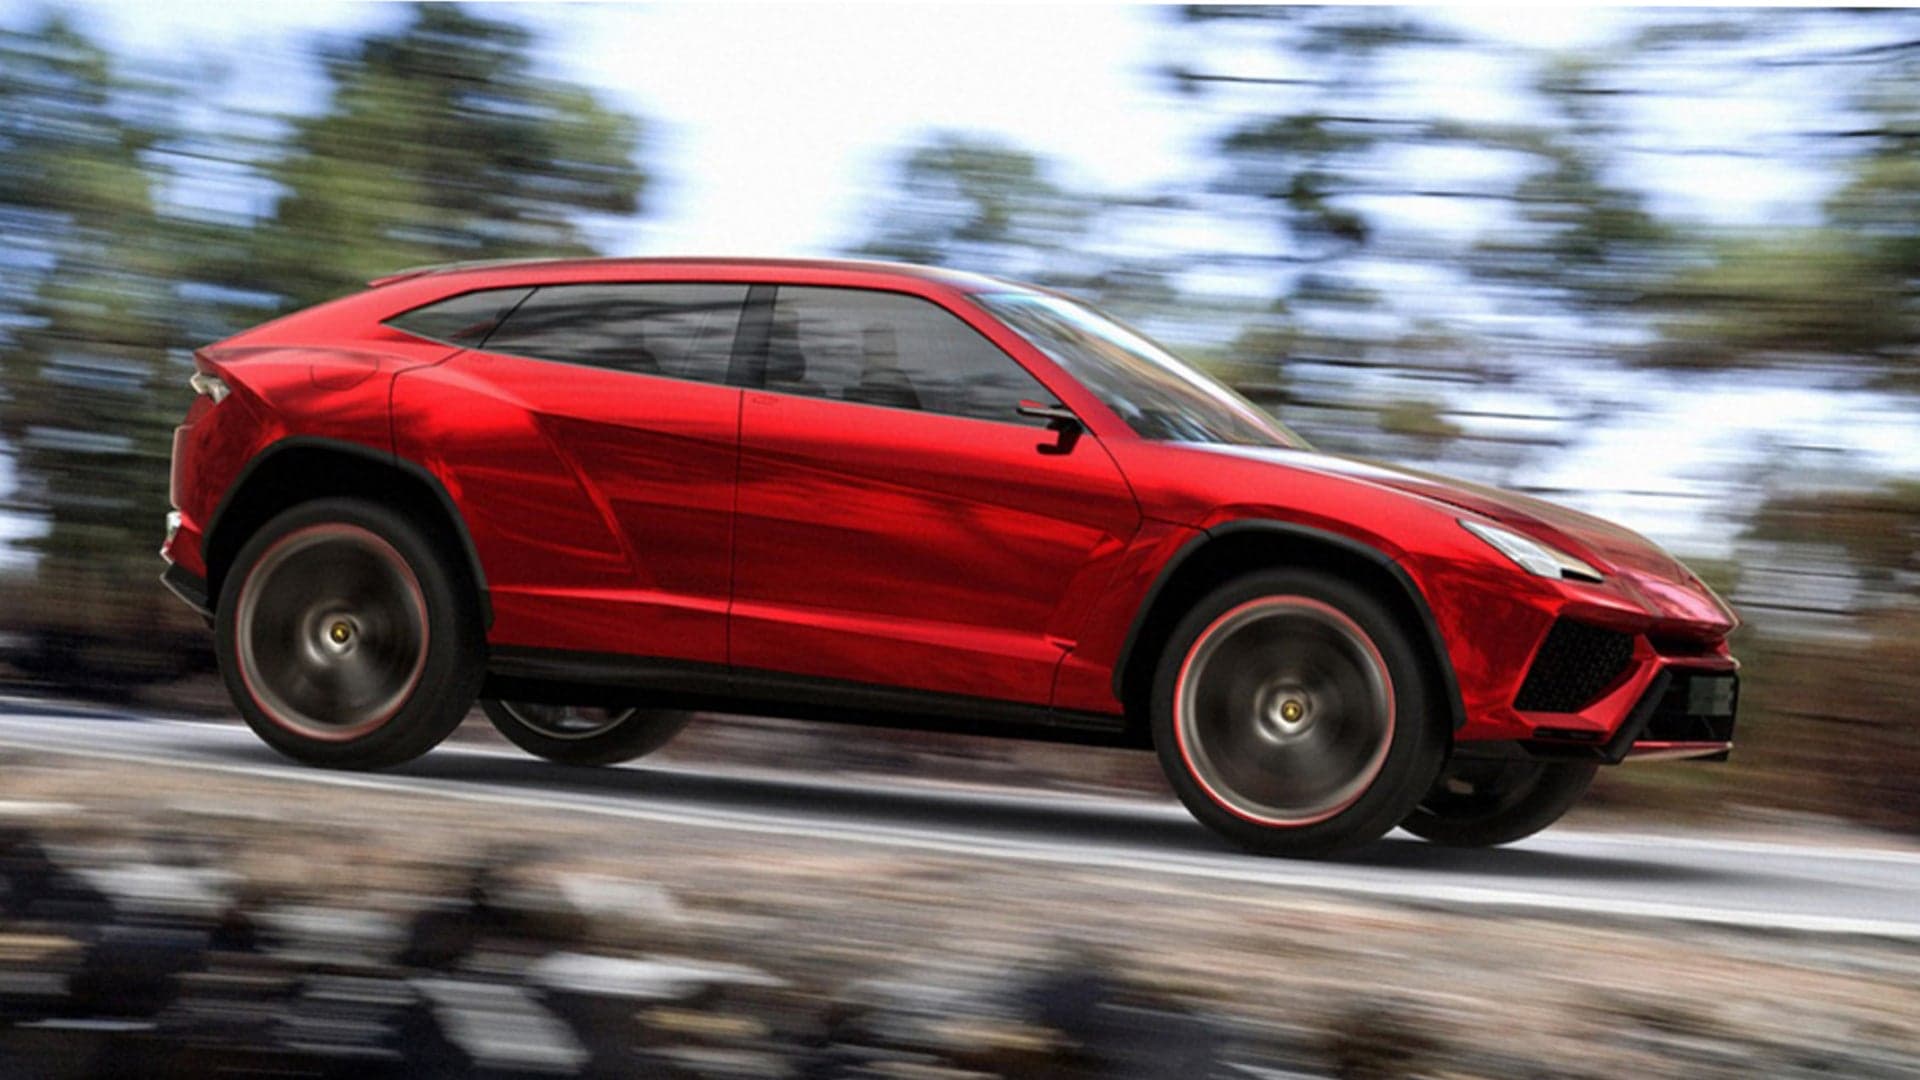 Lamborghini Urus Will Make More Power Than the Hottest Huracan